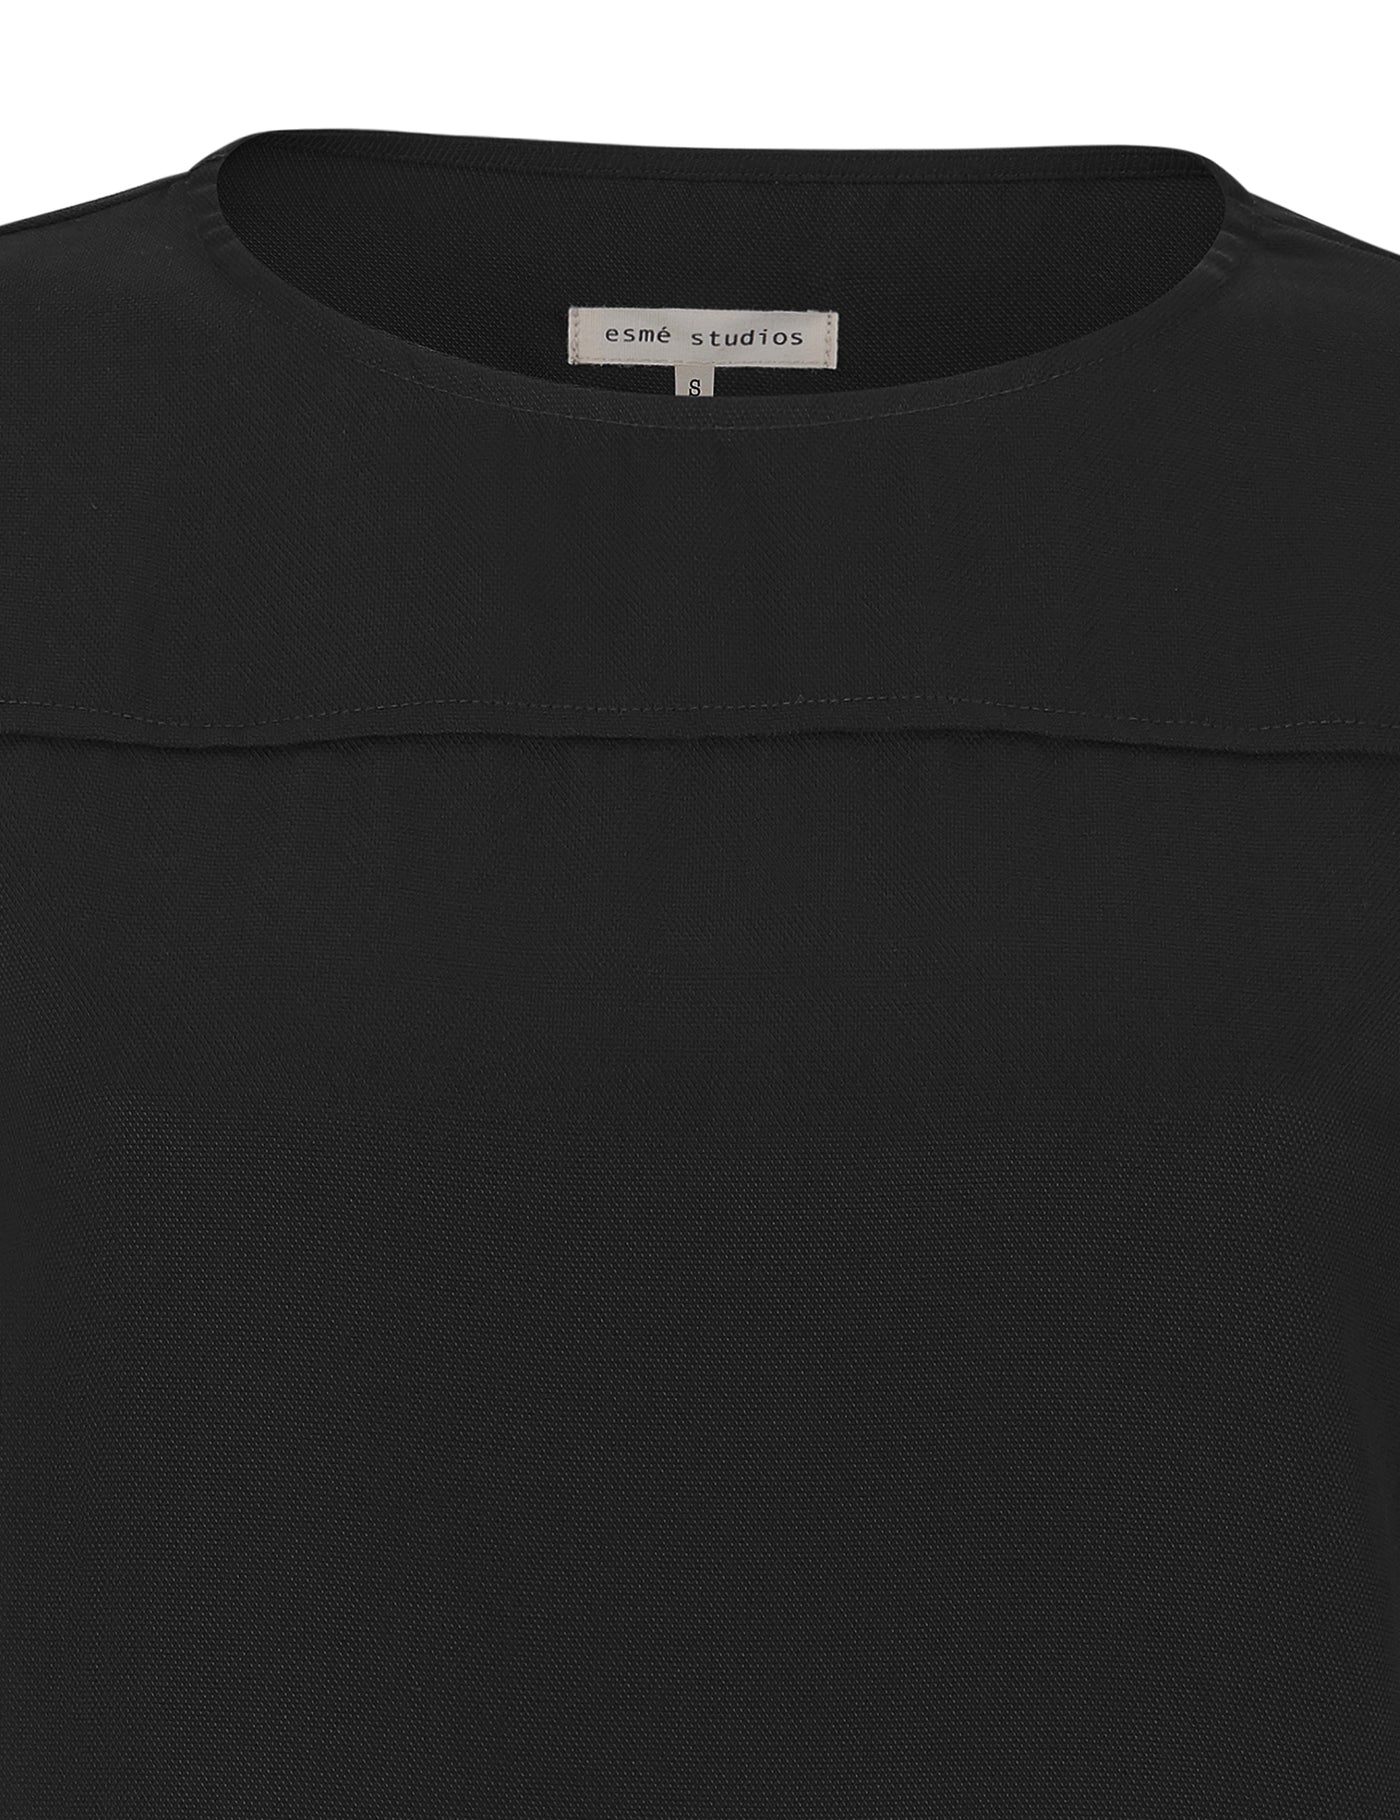 esmé studios ESCeleste T-shirt T-Shirt 001 Black